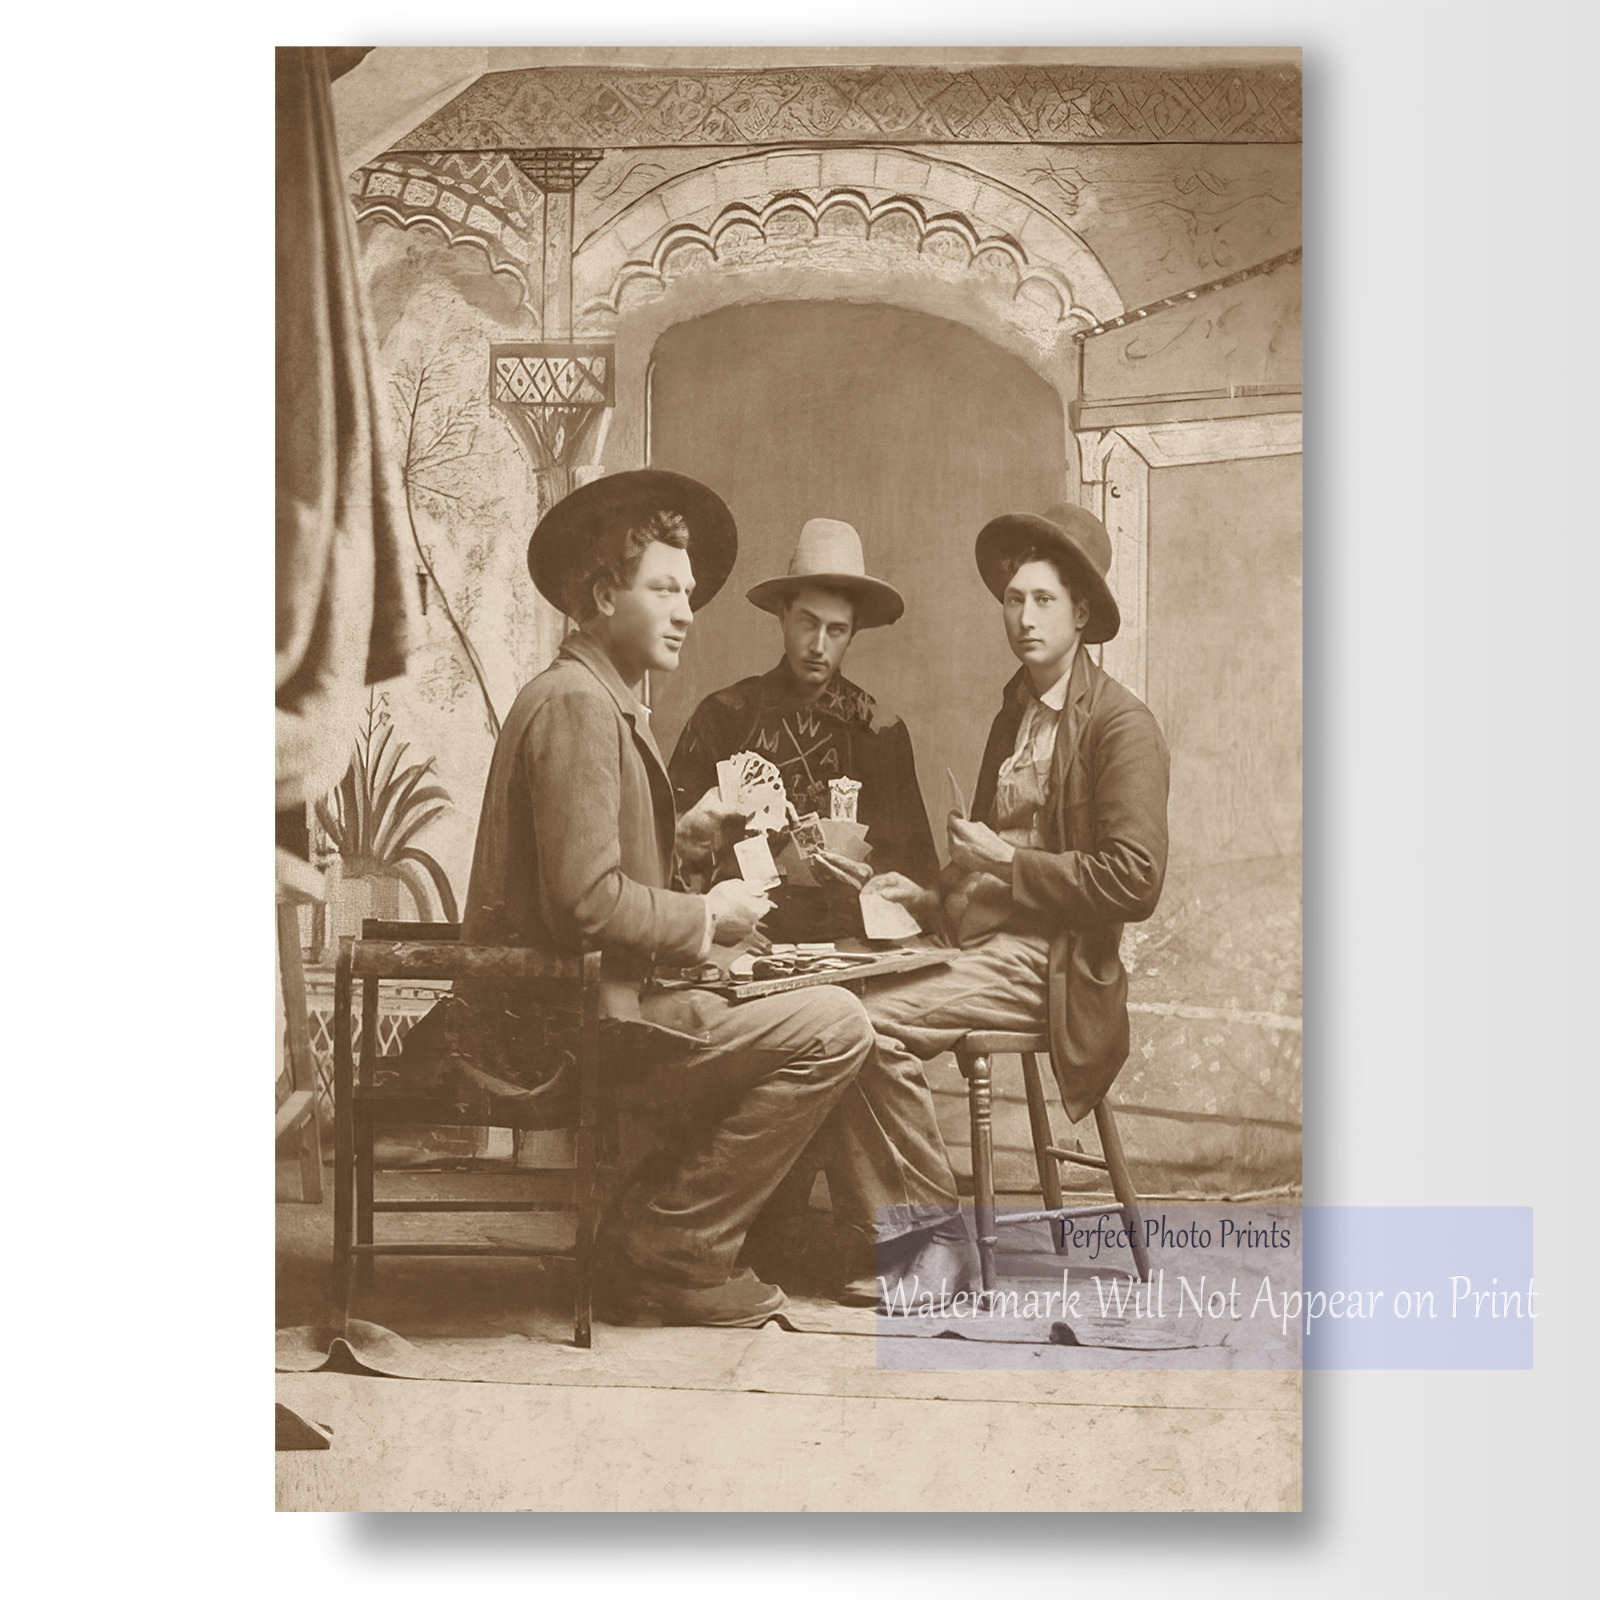 Vintage Cowboy Poker Game Photo Print - Old West Saloon Gambling